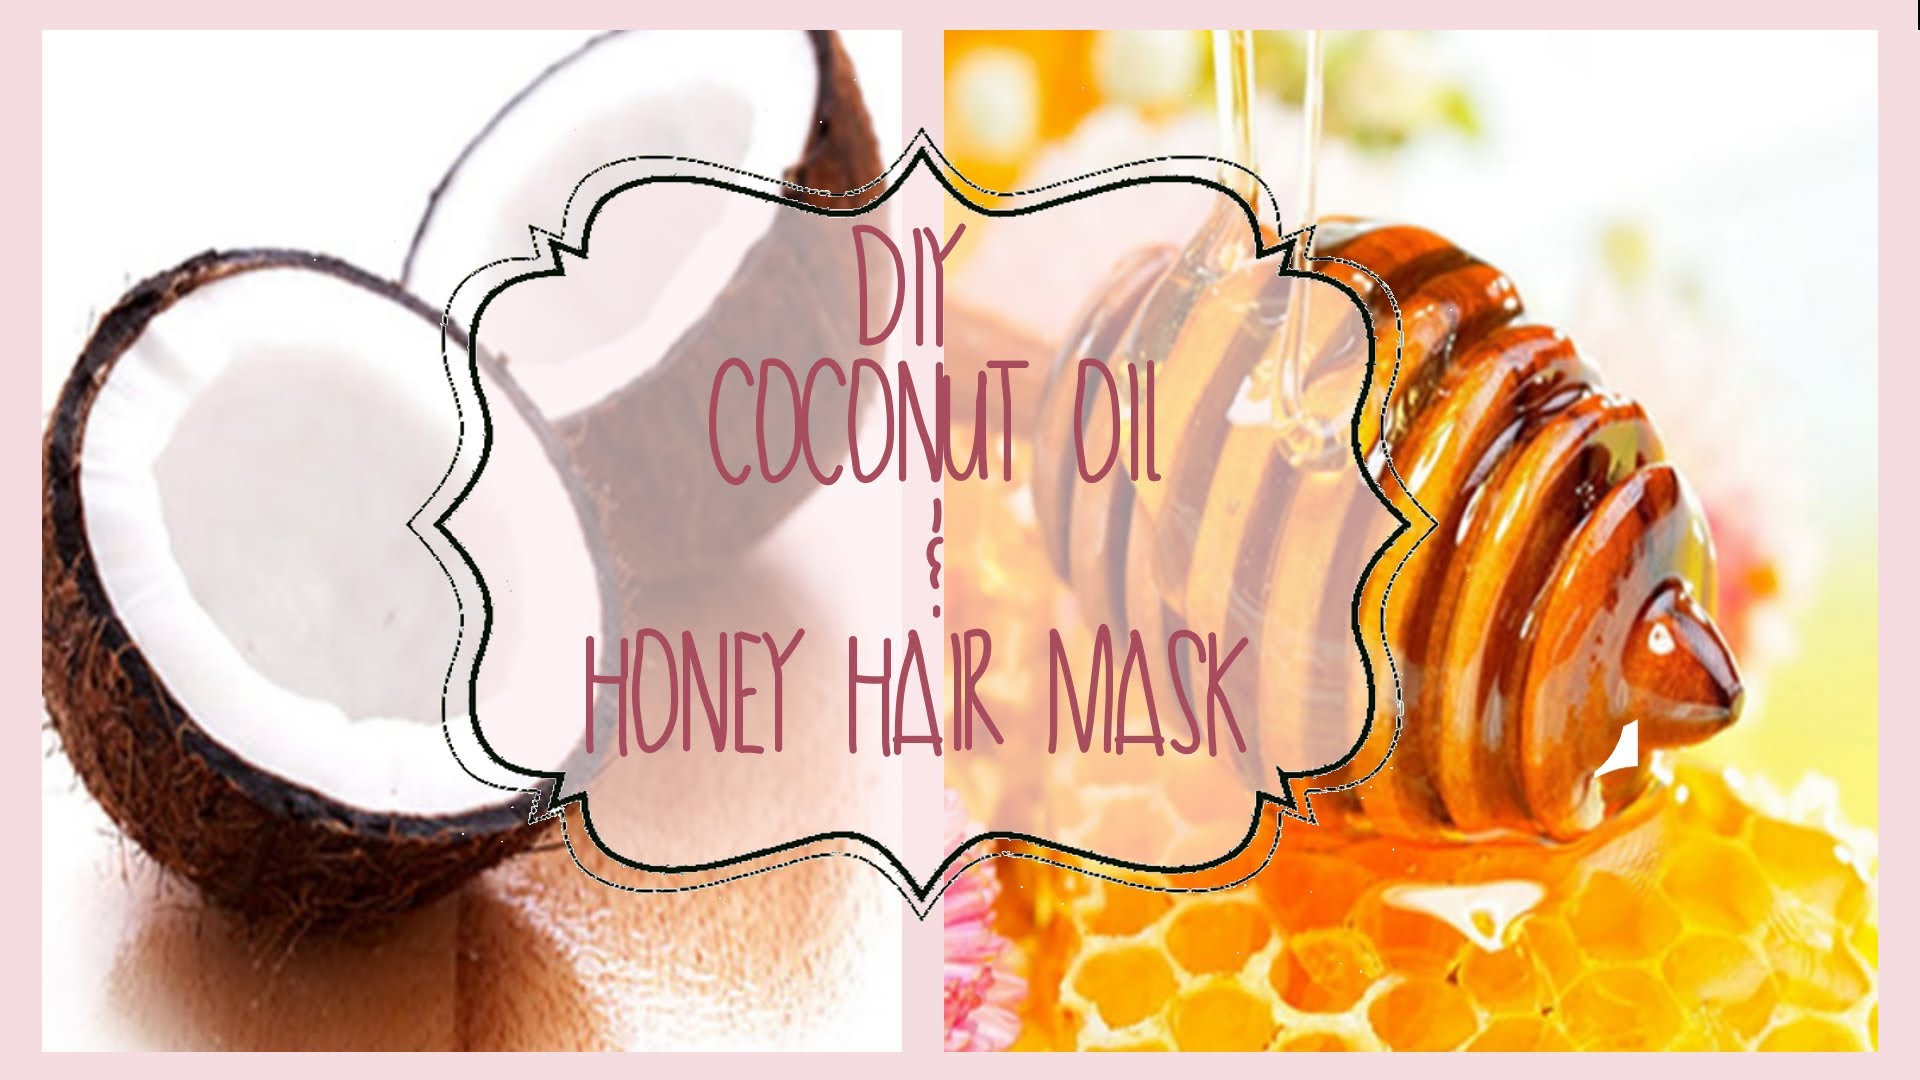 Homemade Coconut Oil and Honey Hair Mask